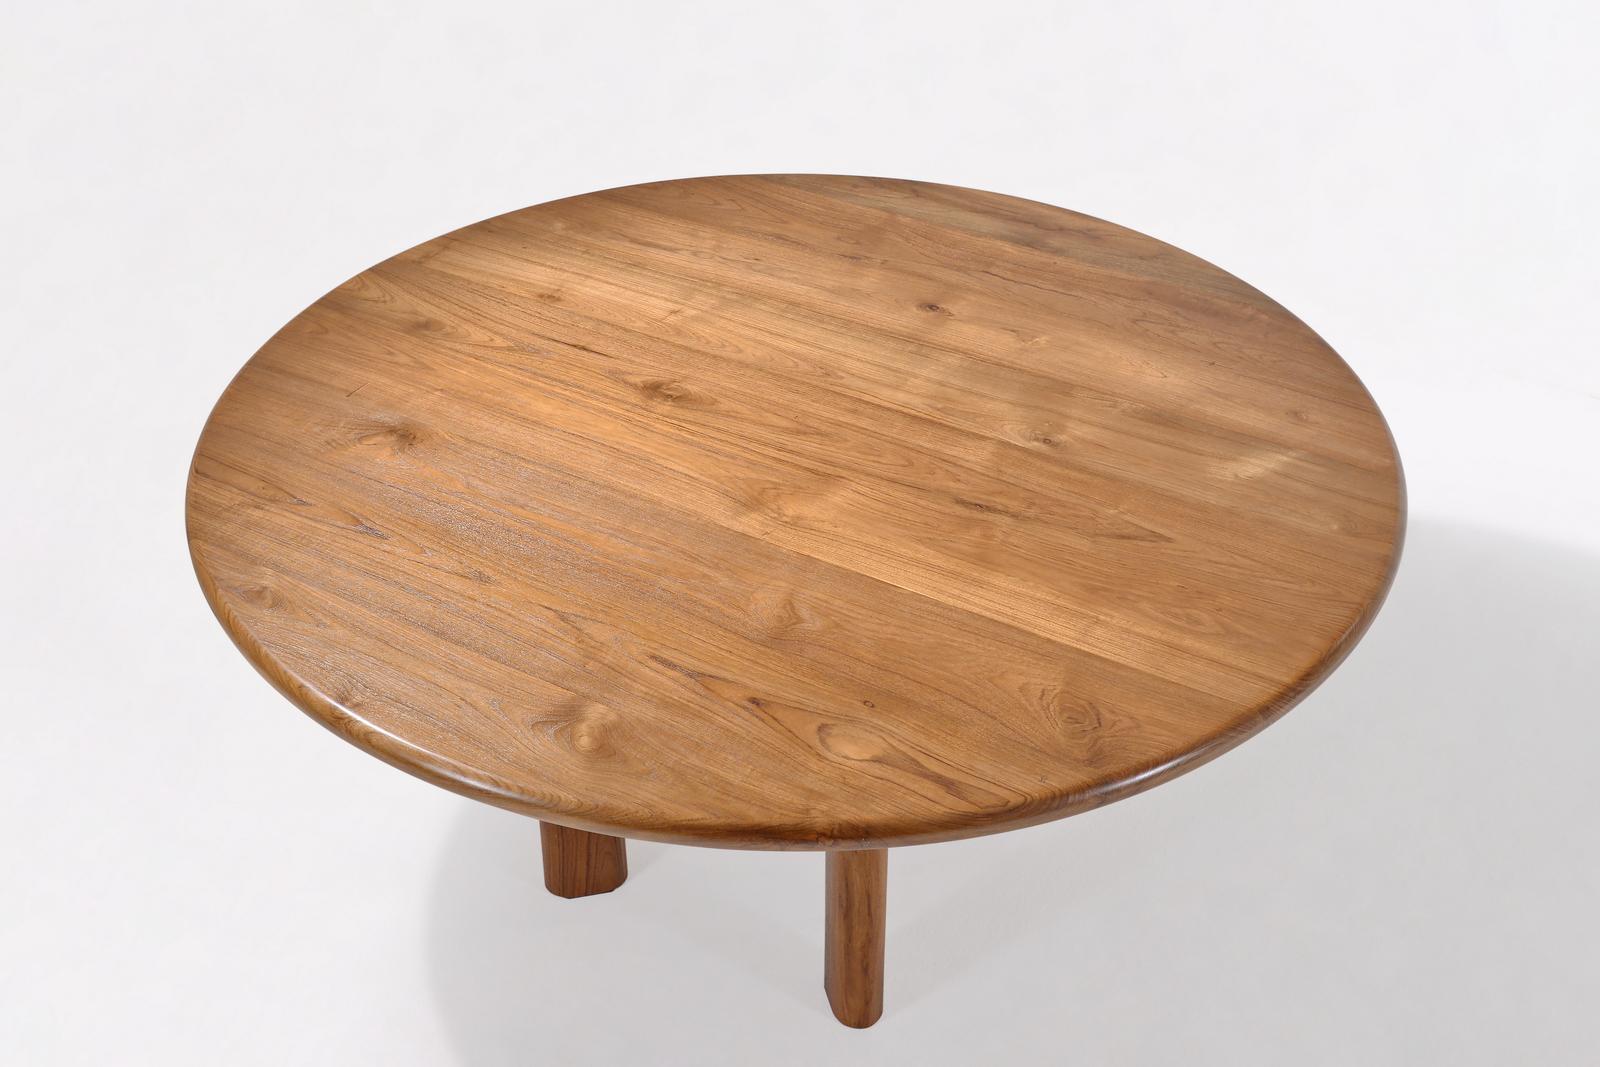 Minimalist Bespoke Round Table with Wood Base, Reclaimed Teak Wood, by P. Tendercool For Sale